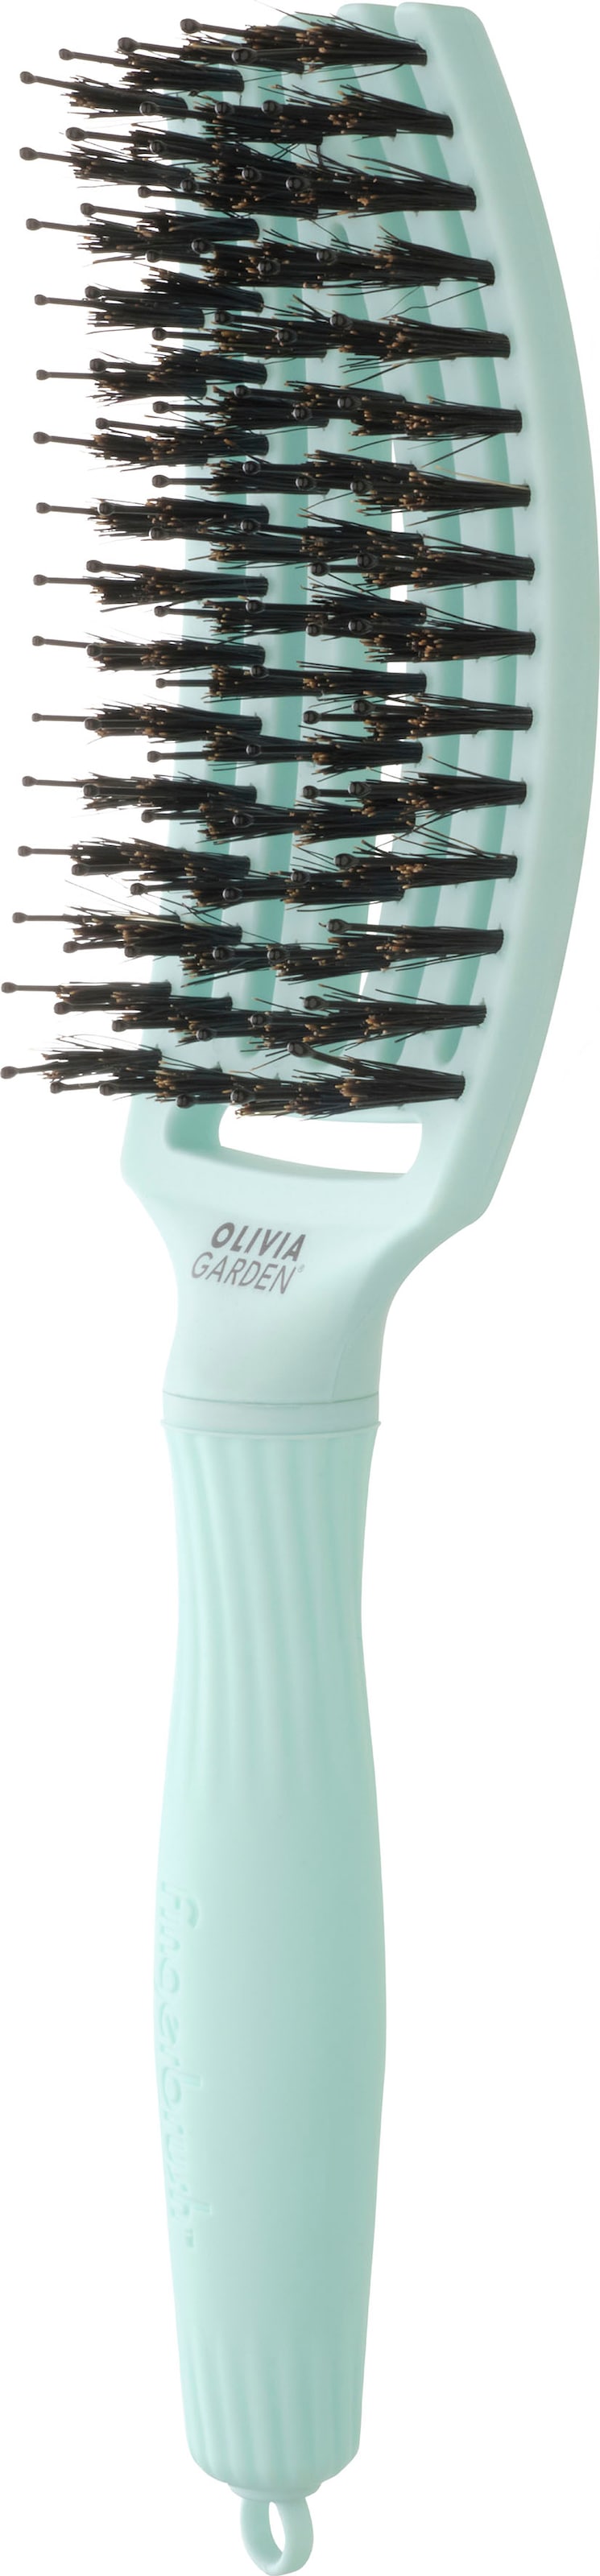 OLIVIA GARDEN »Fingerbrush mit Garantie 3 Jahren XXL Medium« Combo Haarbürste